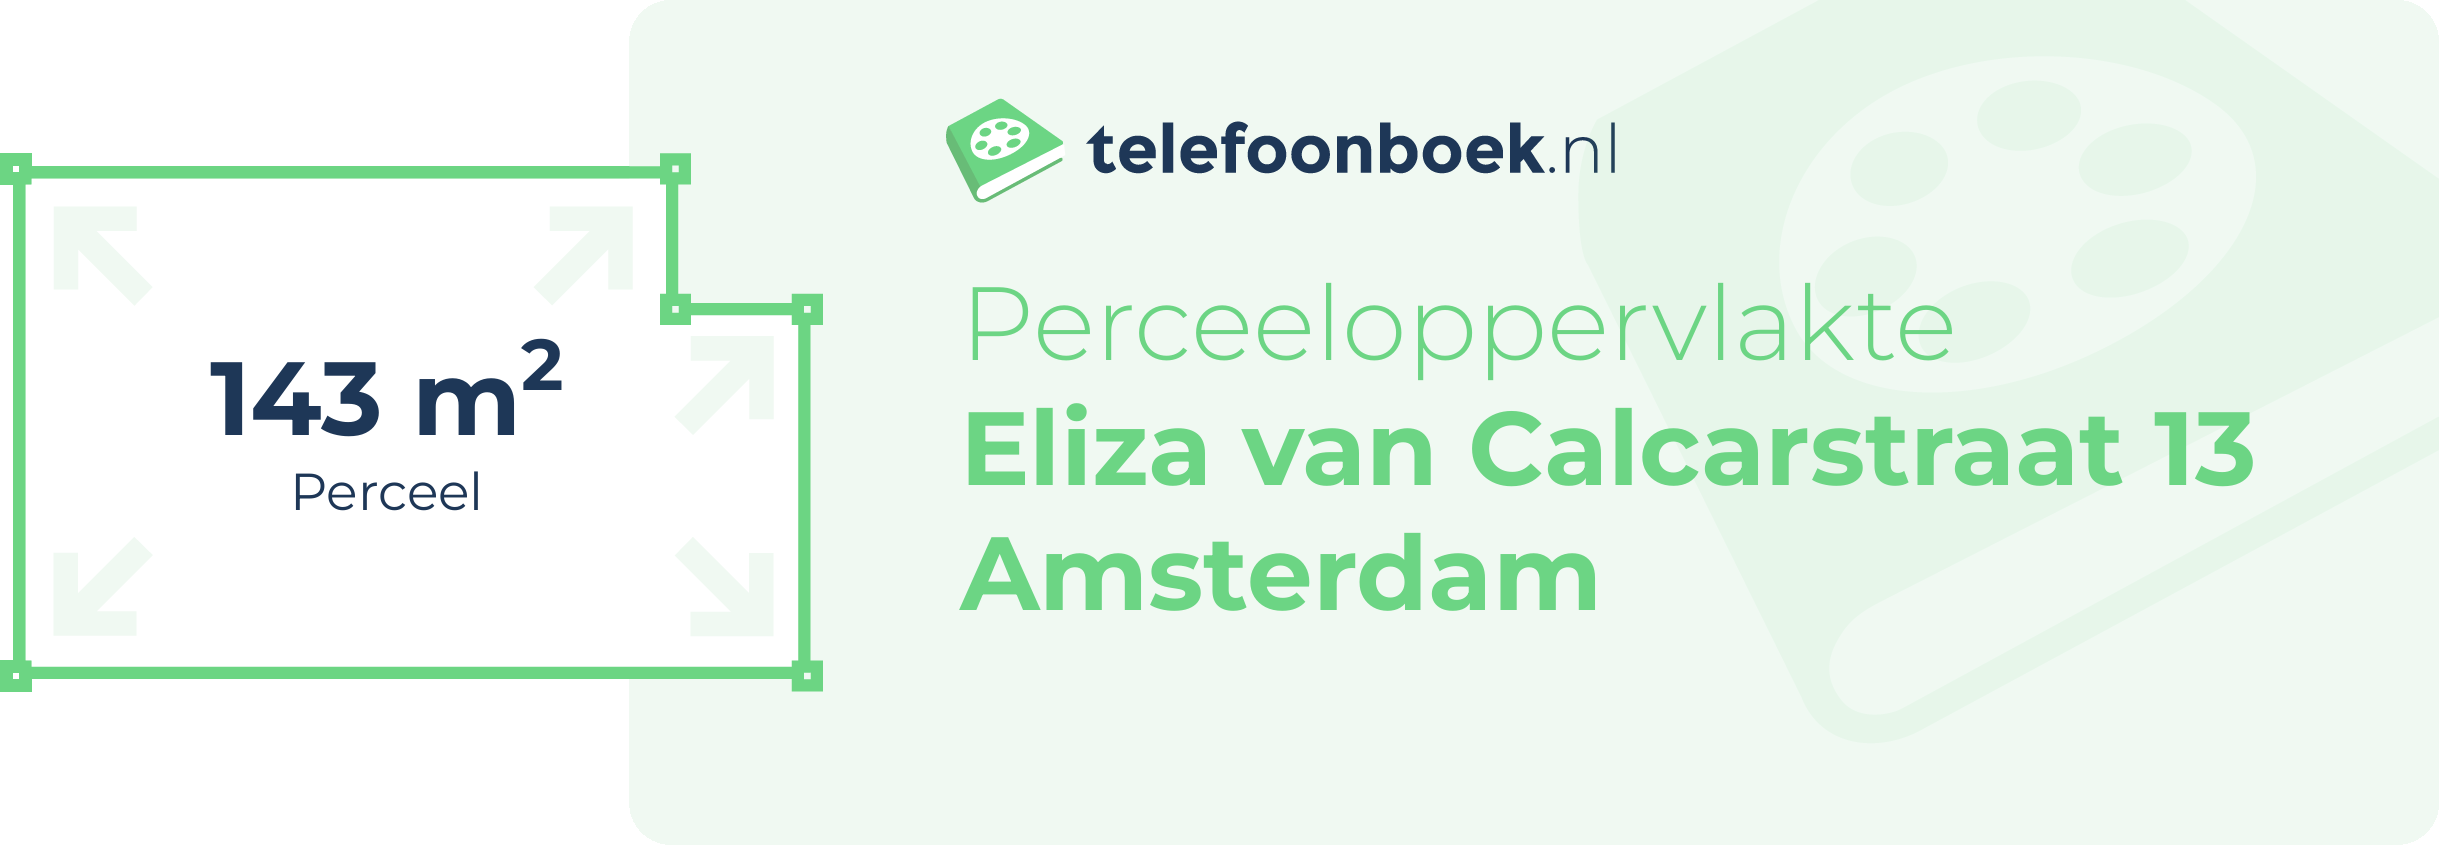 Perceeloppervlakte Eliza Van Calcarstraat 13 Amsterdam